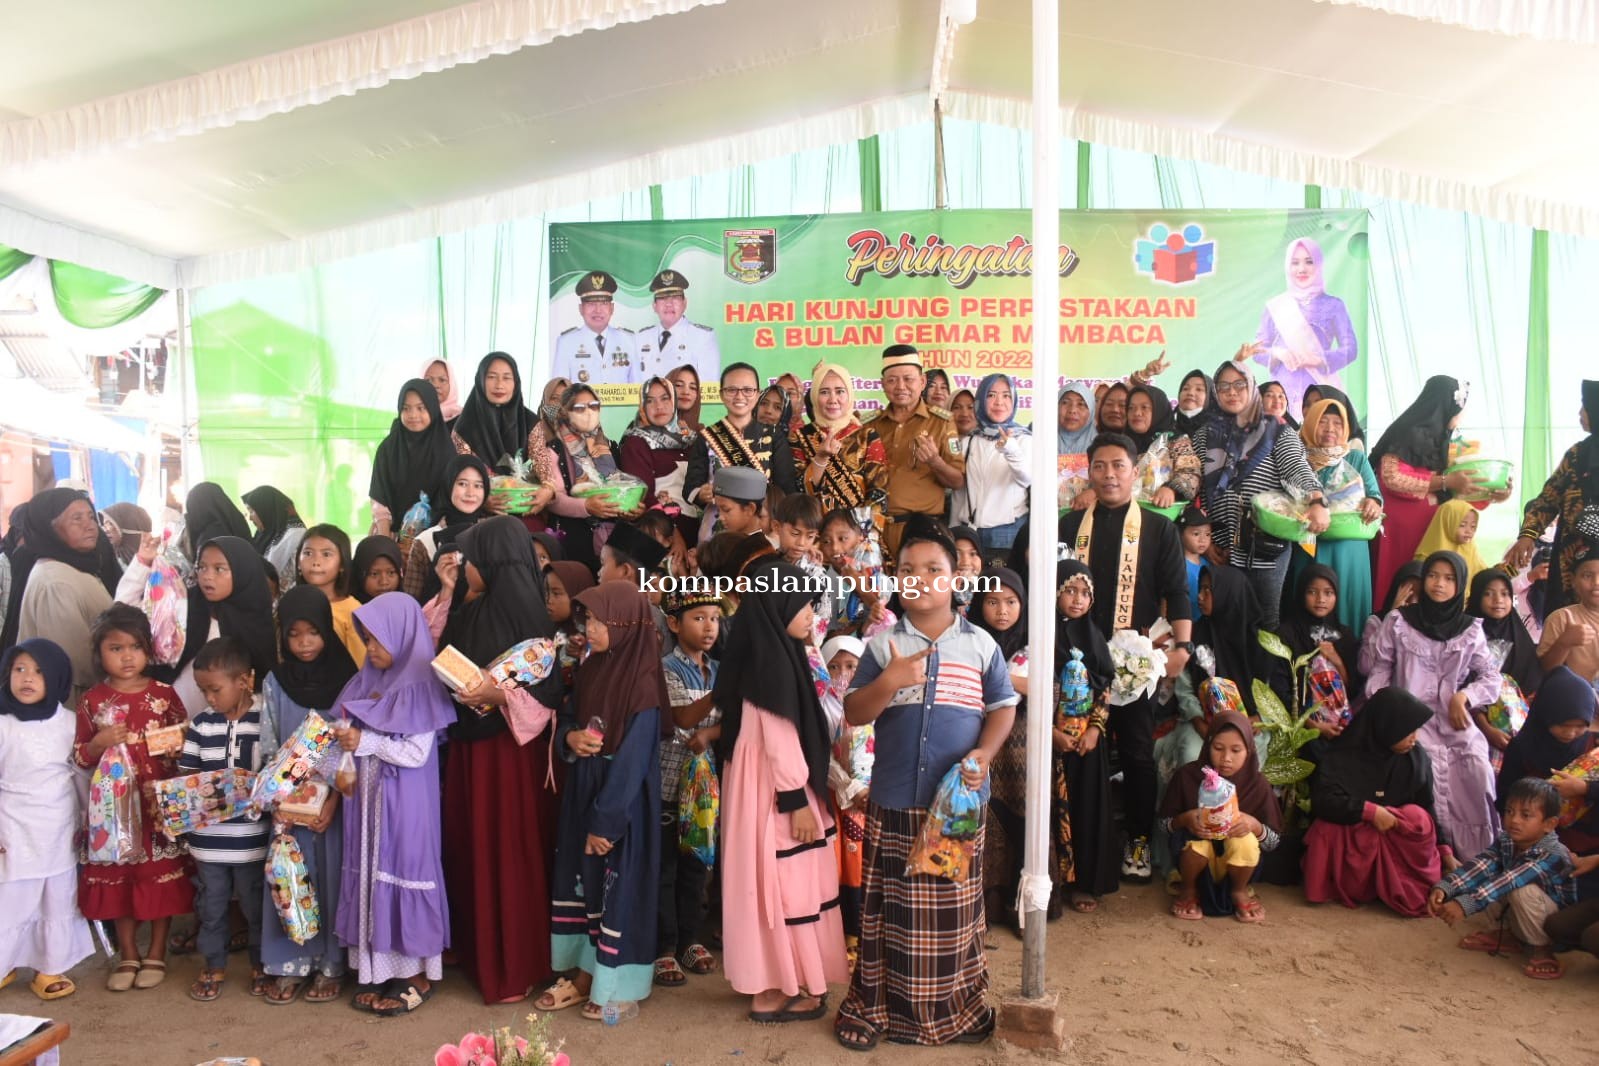 Bupati Lampung Timur Buka Acara Hari Kunjungan Perpustakaan dan Gemar Membaca